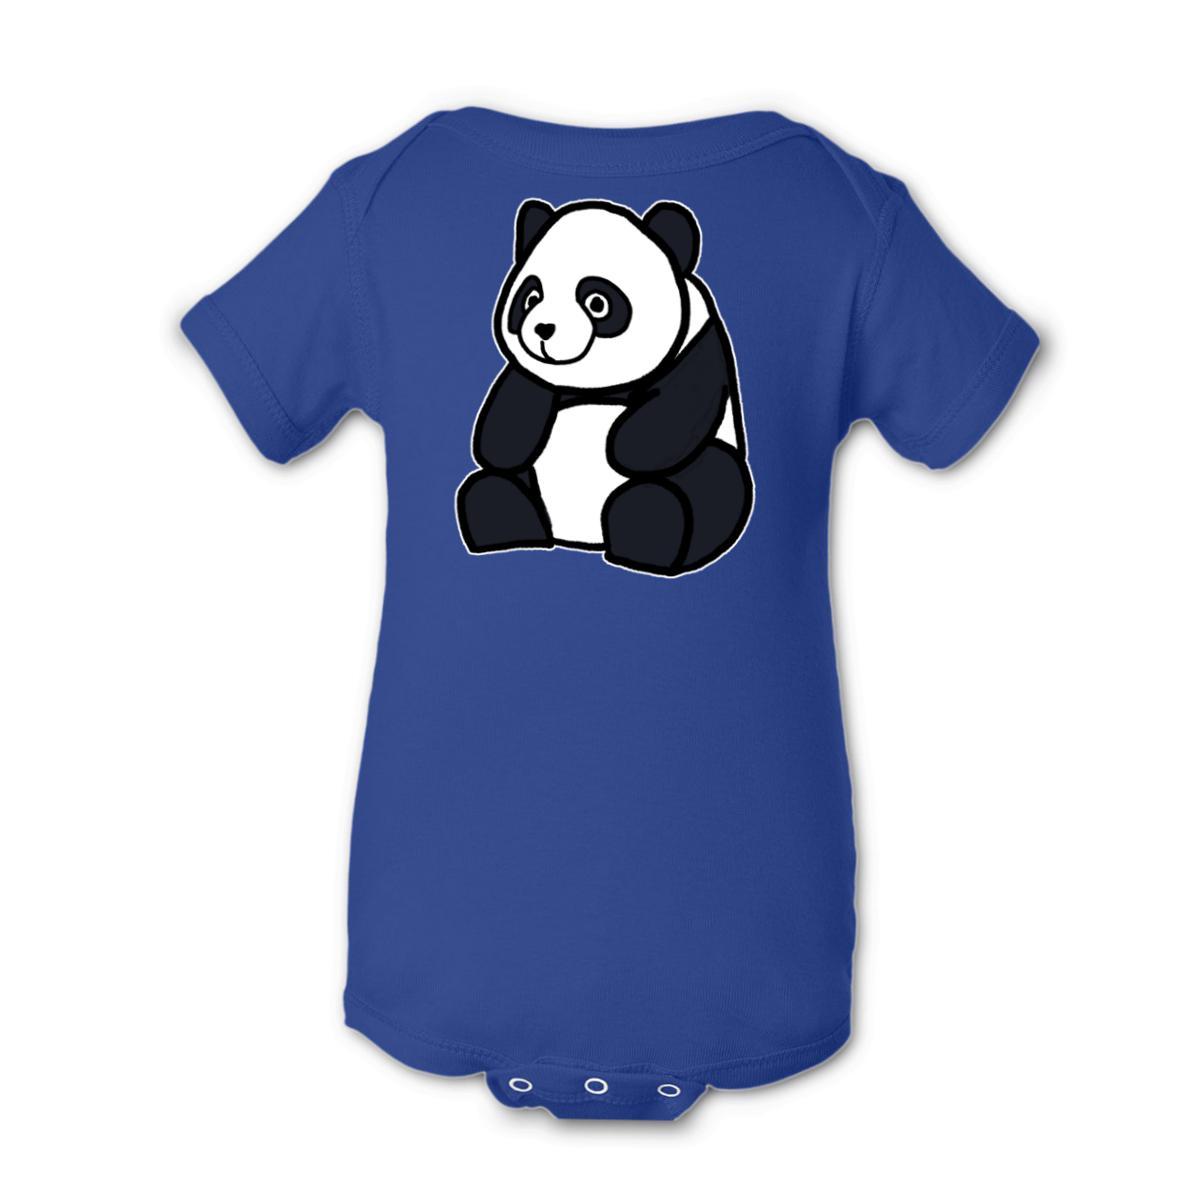 Panda Onesie 12M royal-blue